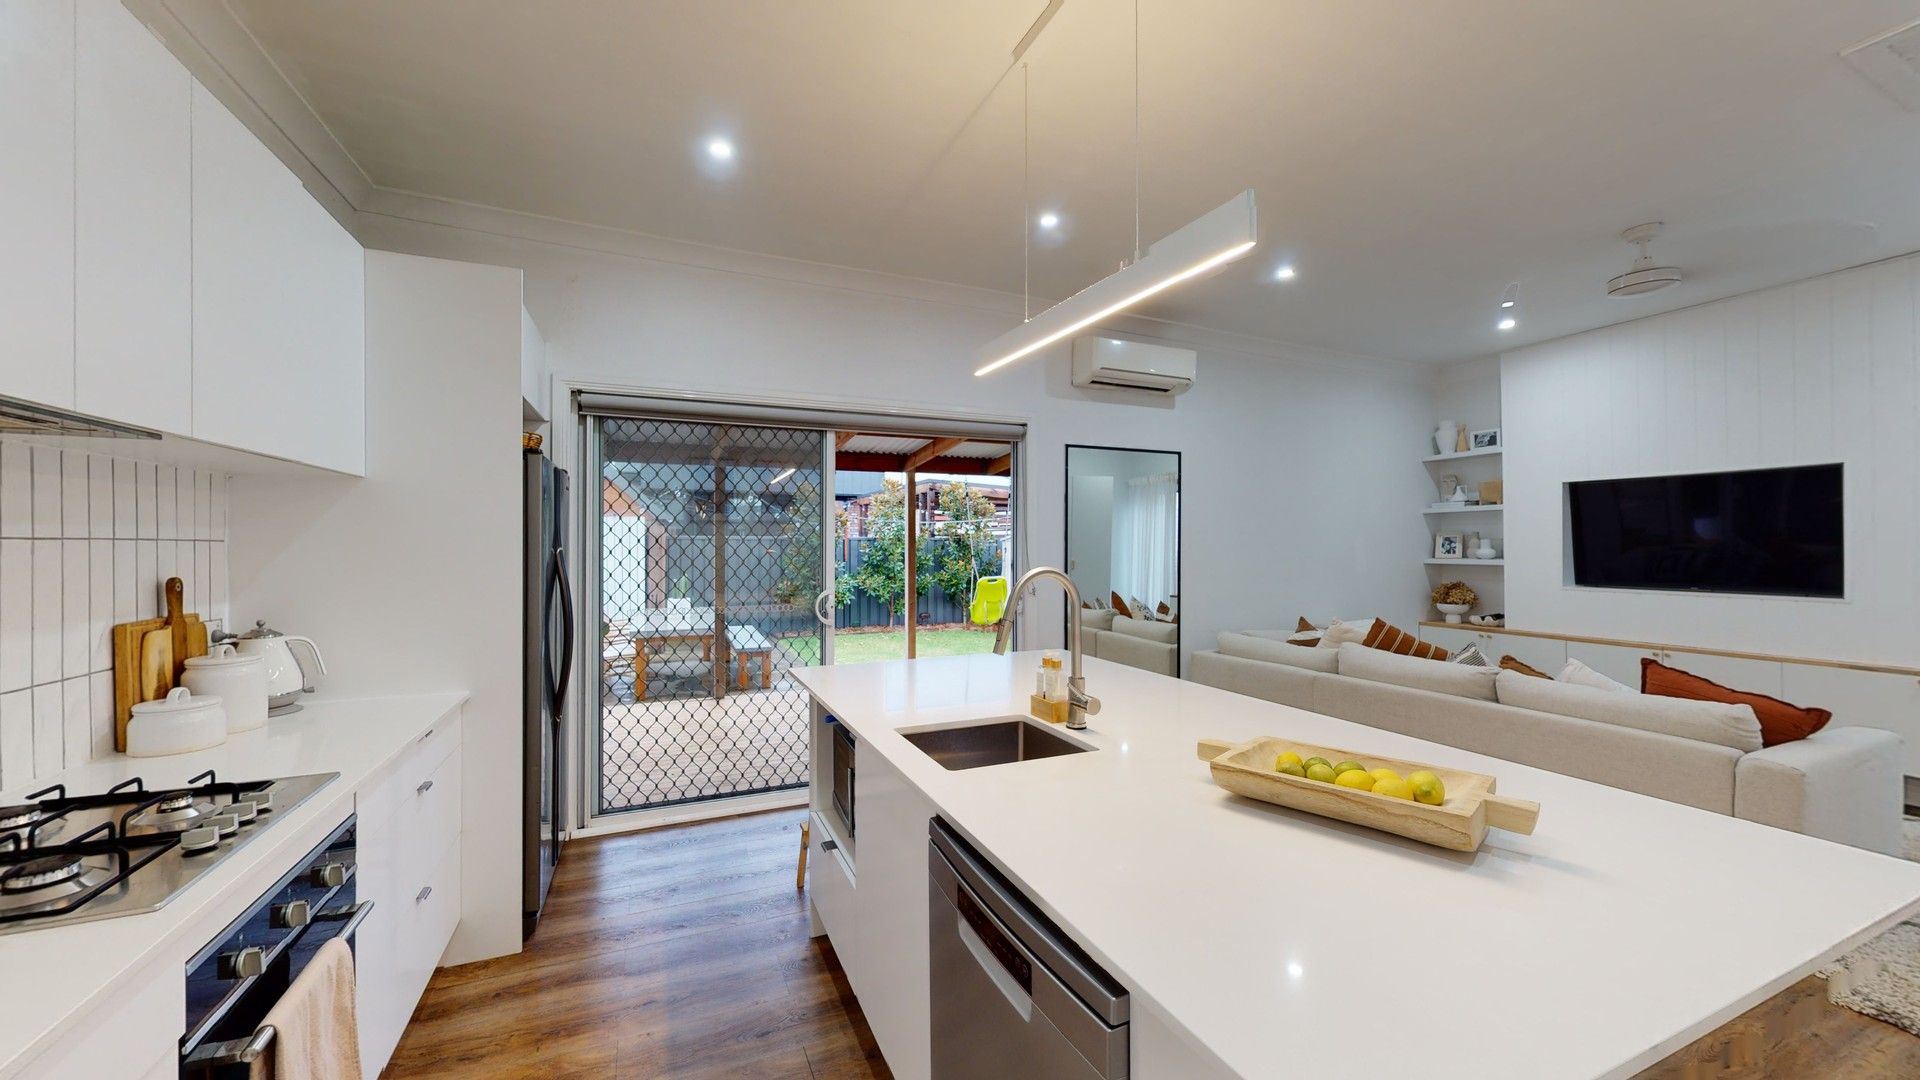 3 bedrooms House in 64 Wilson Street CARRINGTON NSW, 2294